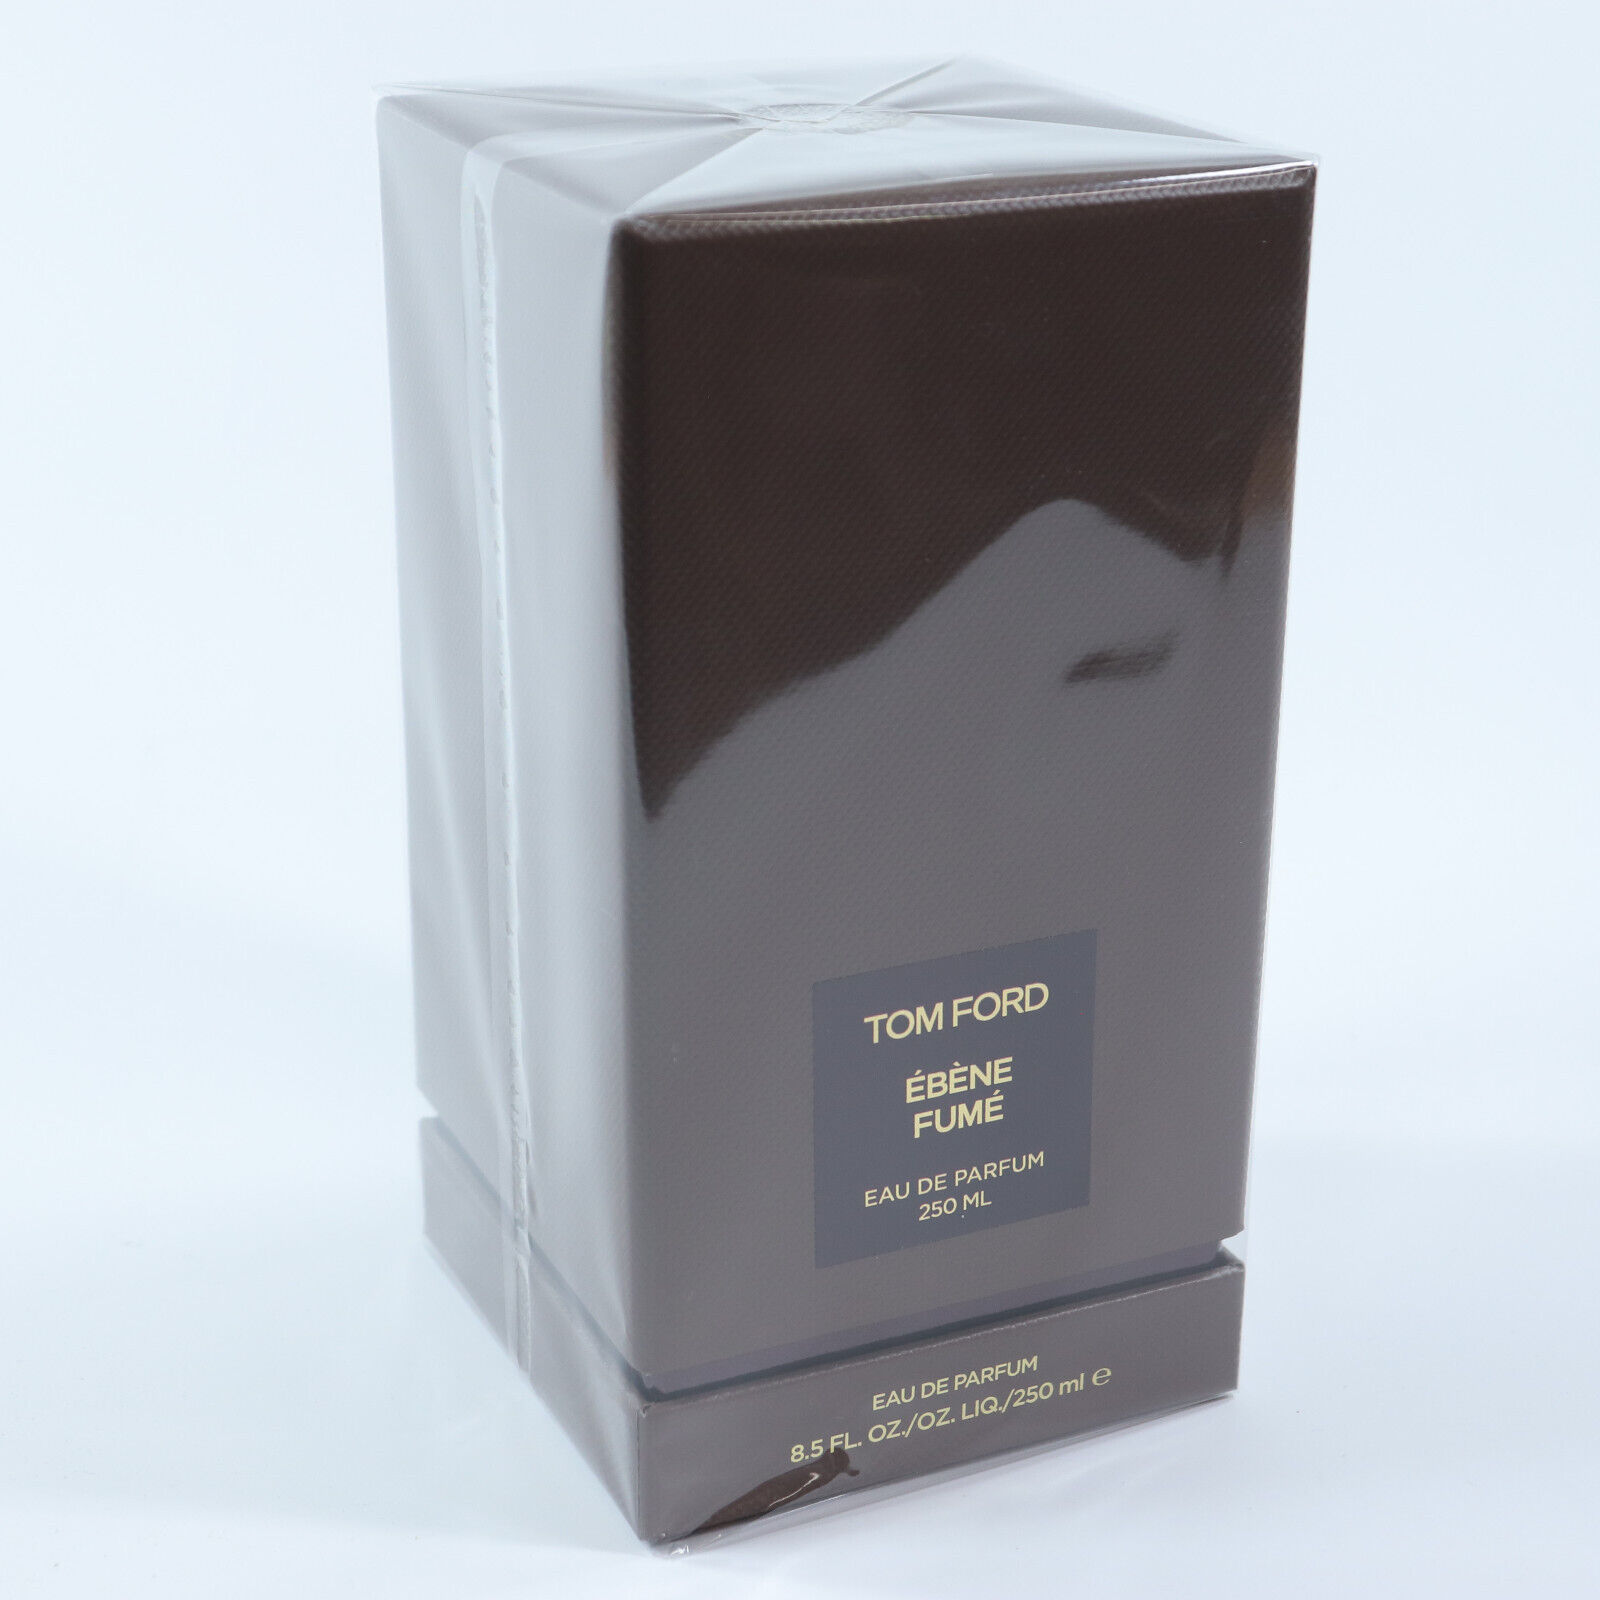 Tom Ford Ebene Fume Eau De Parfum 8.5 Oz / 250 Ml - New Sealed - Authentic